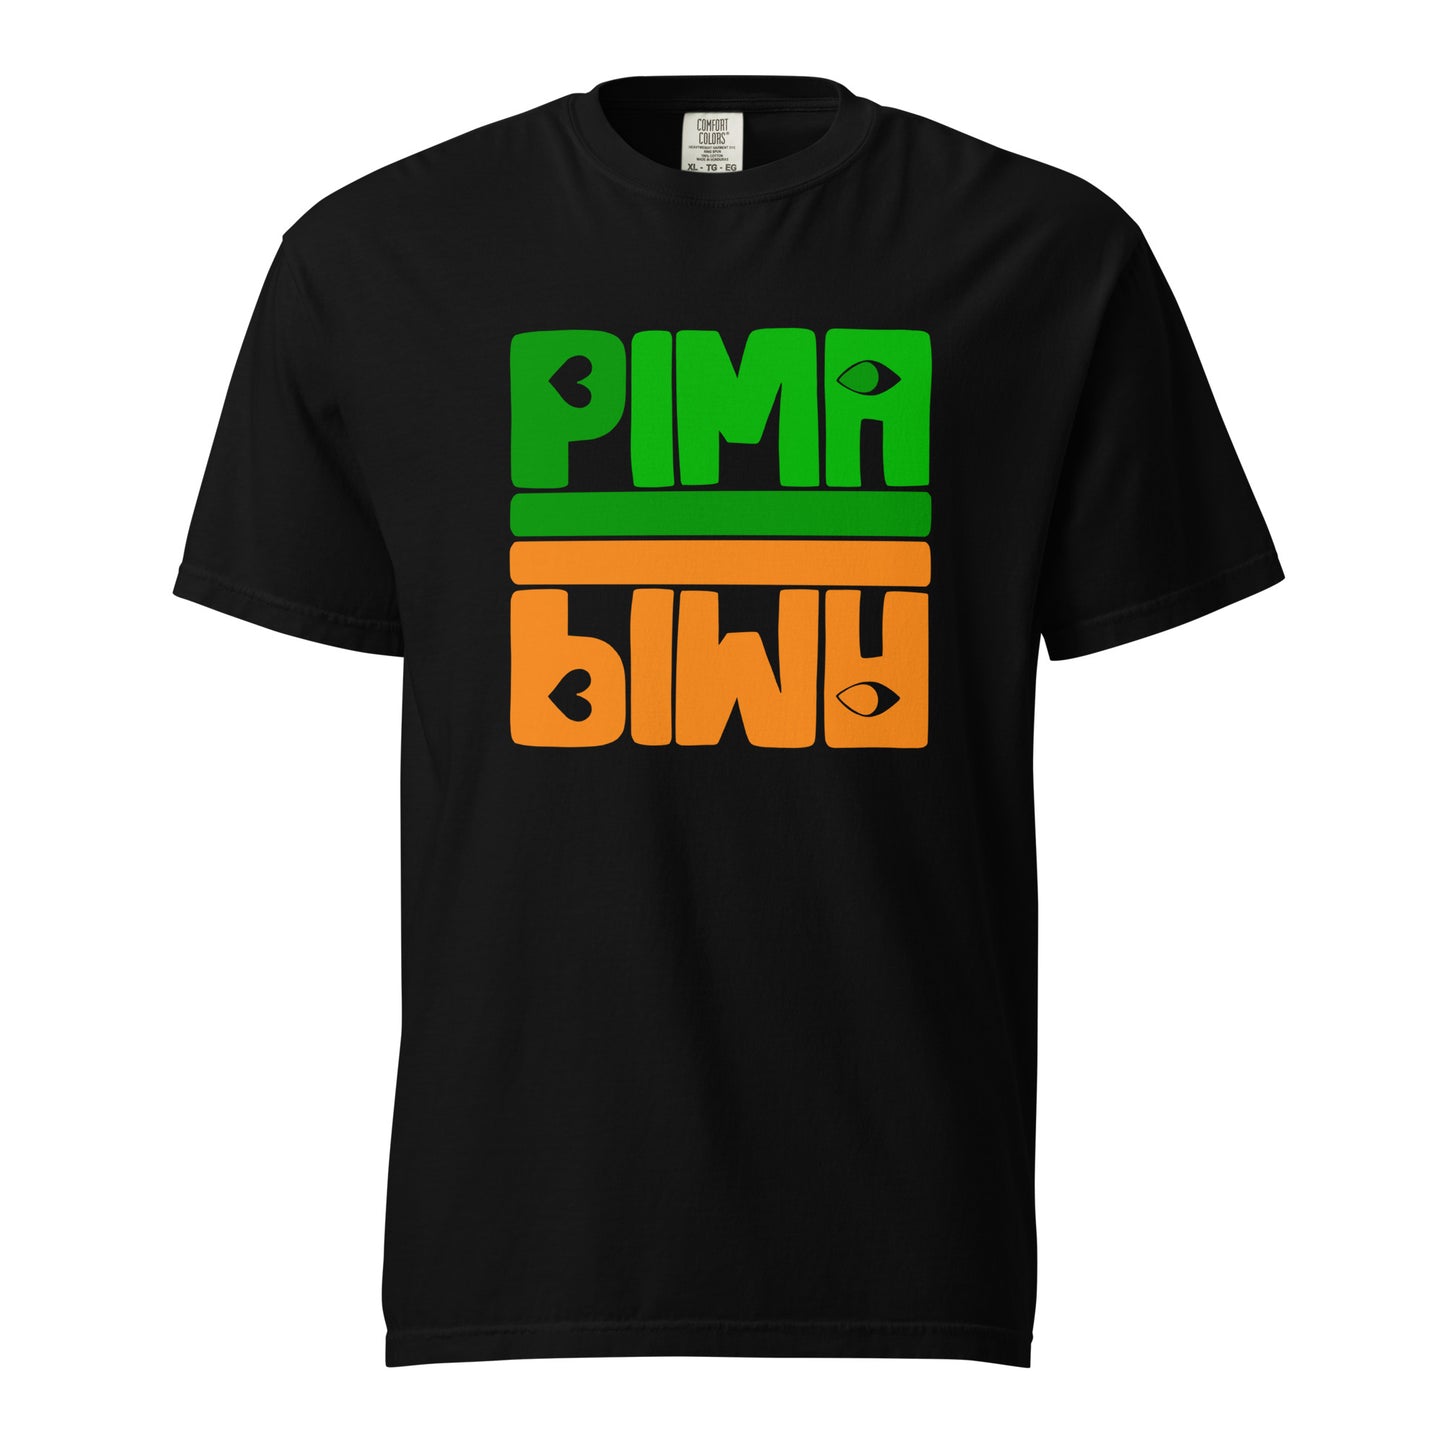 PIMA AMIP orange & green shirt - various colors